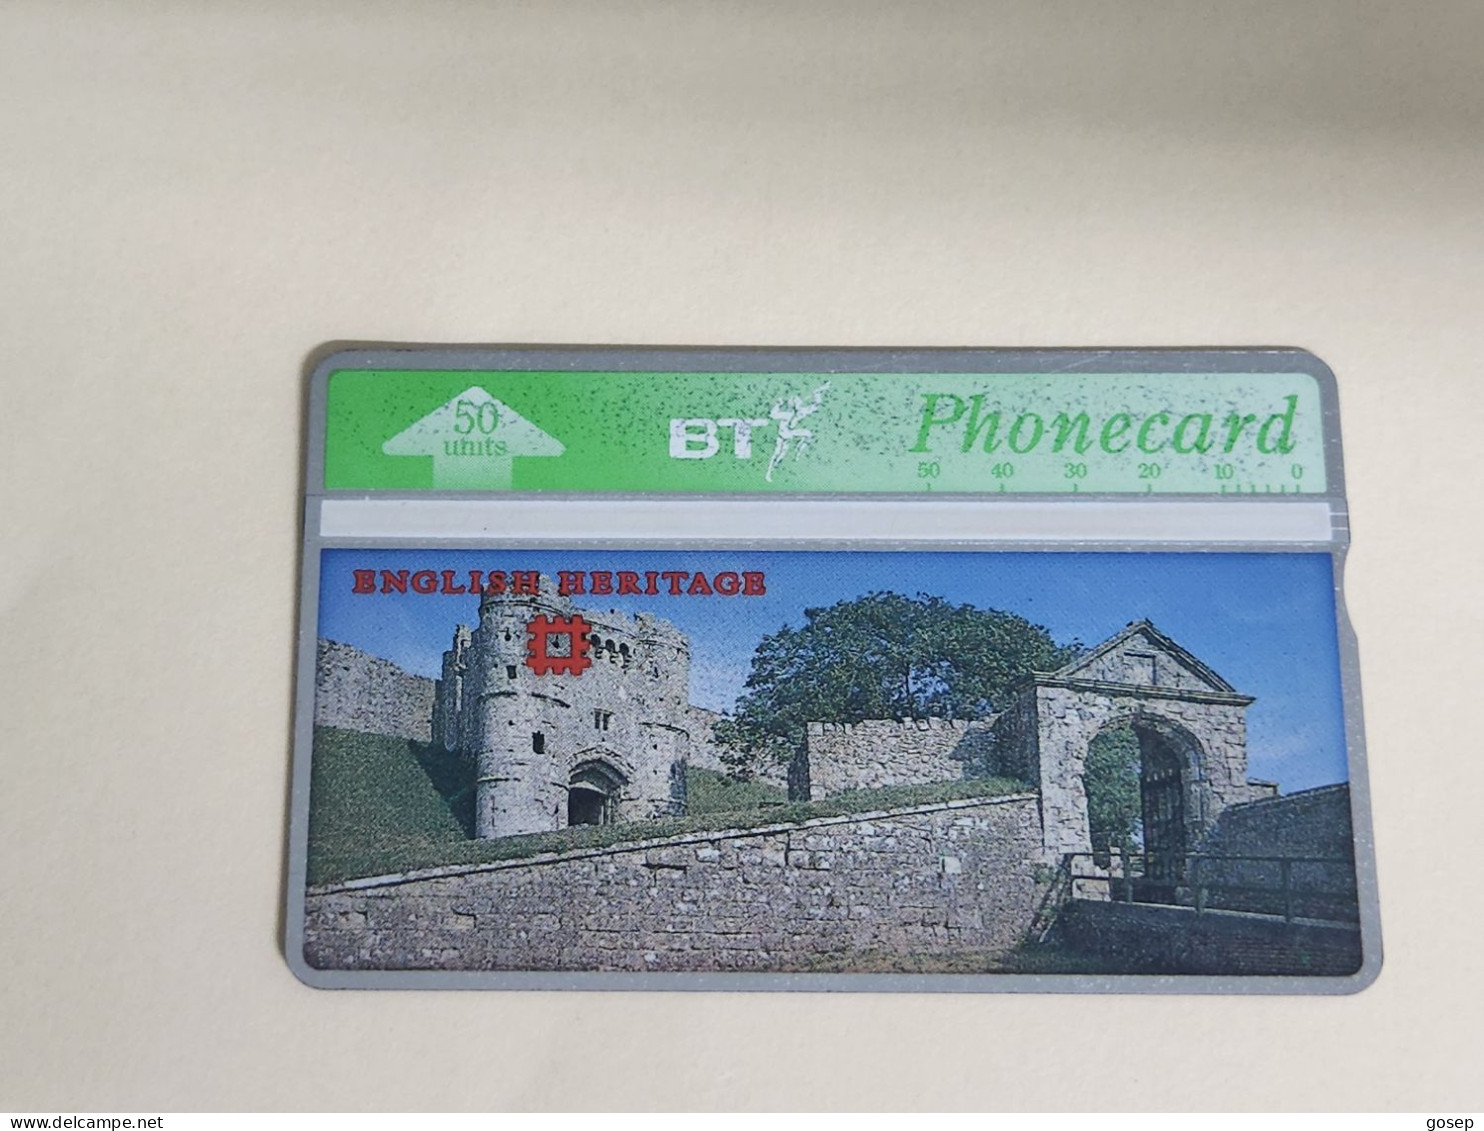 United Kingdom-(BTA105)-HERITAGE-carisbrooke Castle-(171)(50units)(508E91539)price Cataloge8.00£-mint+1card Prepiad Free - BT Advertising Issues